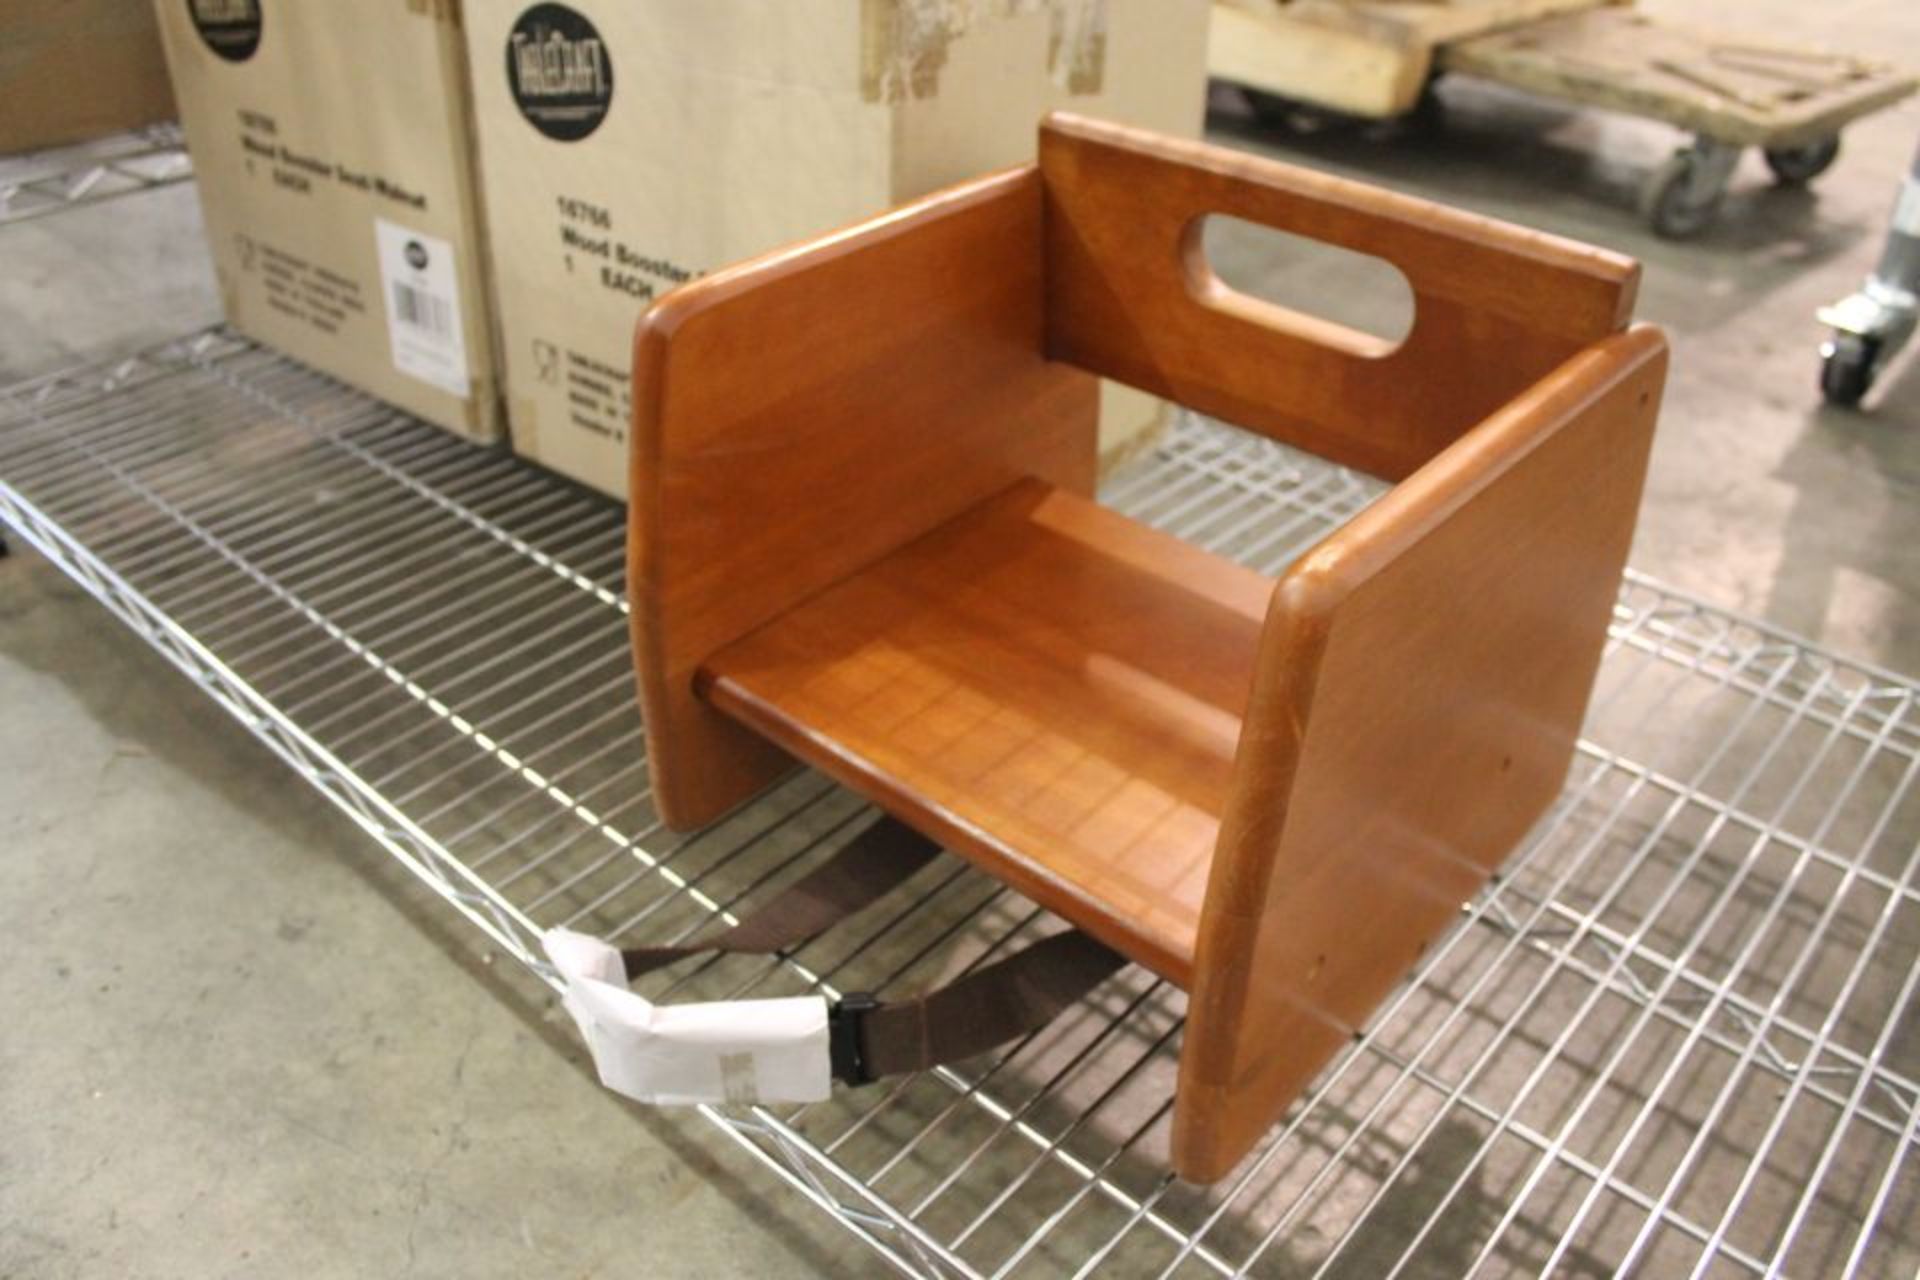 Tablecraft booster seats, lot of (3) wood, walnut finish, model 16766 NEW one open